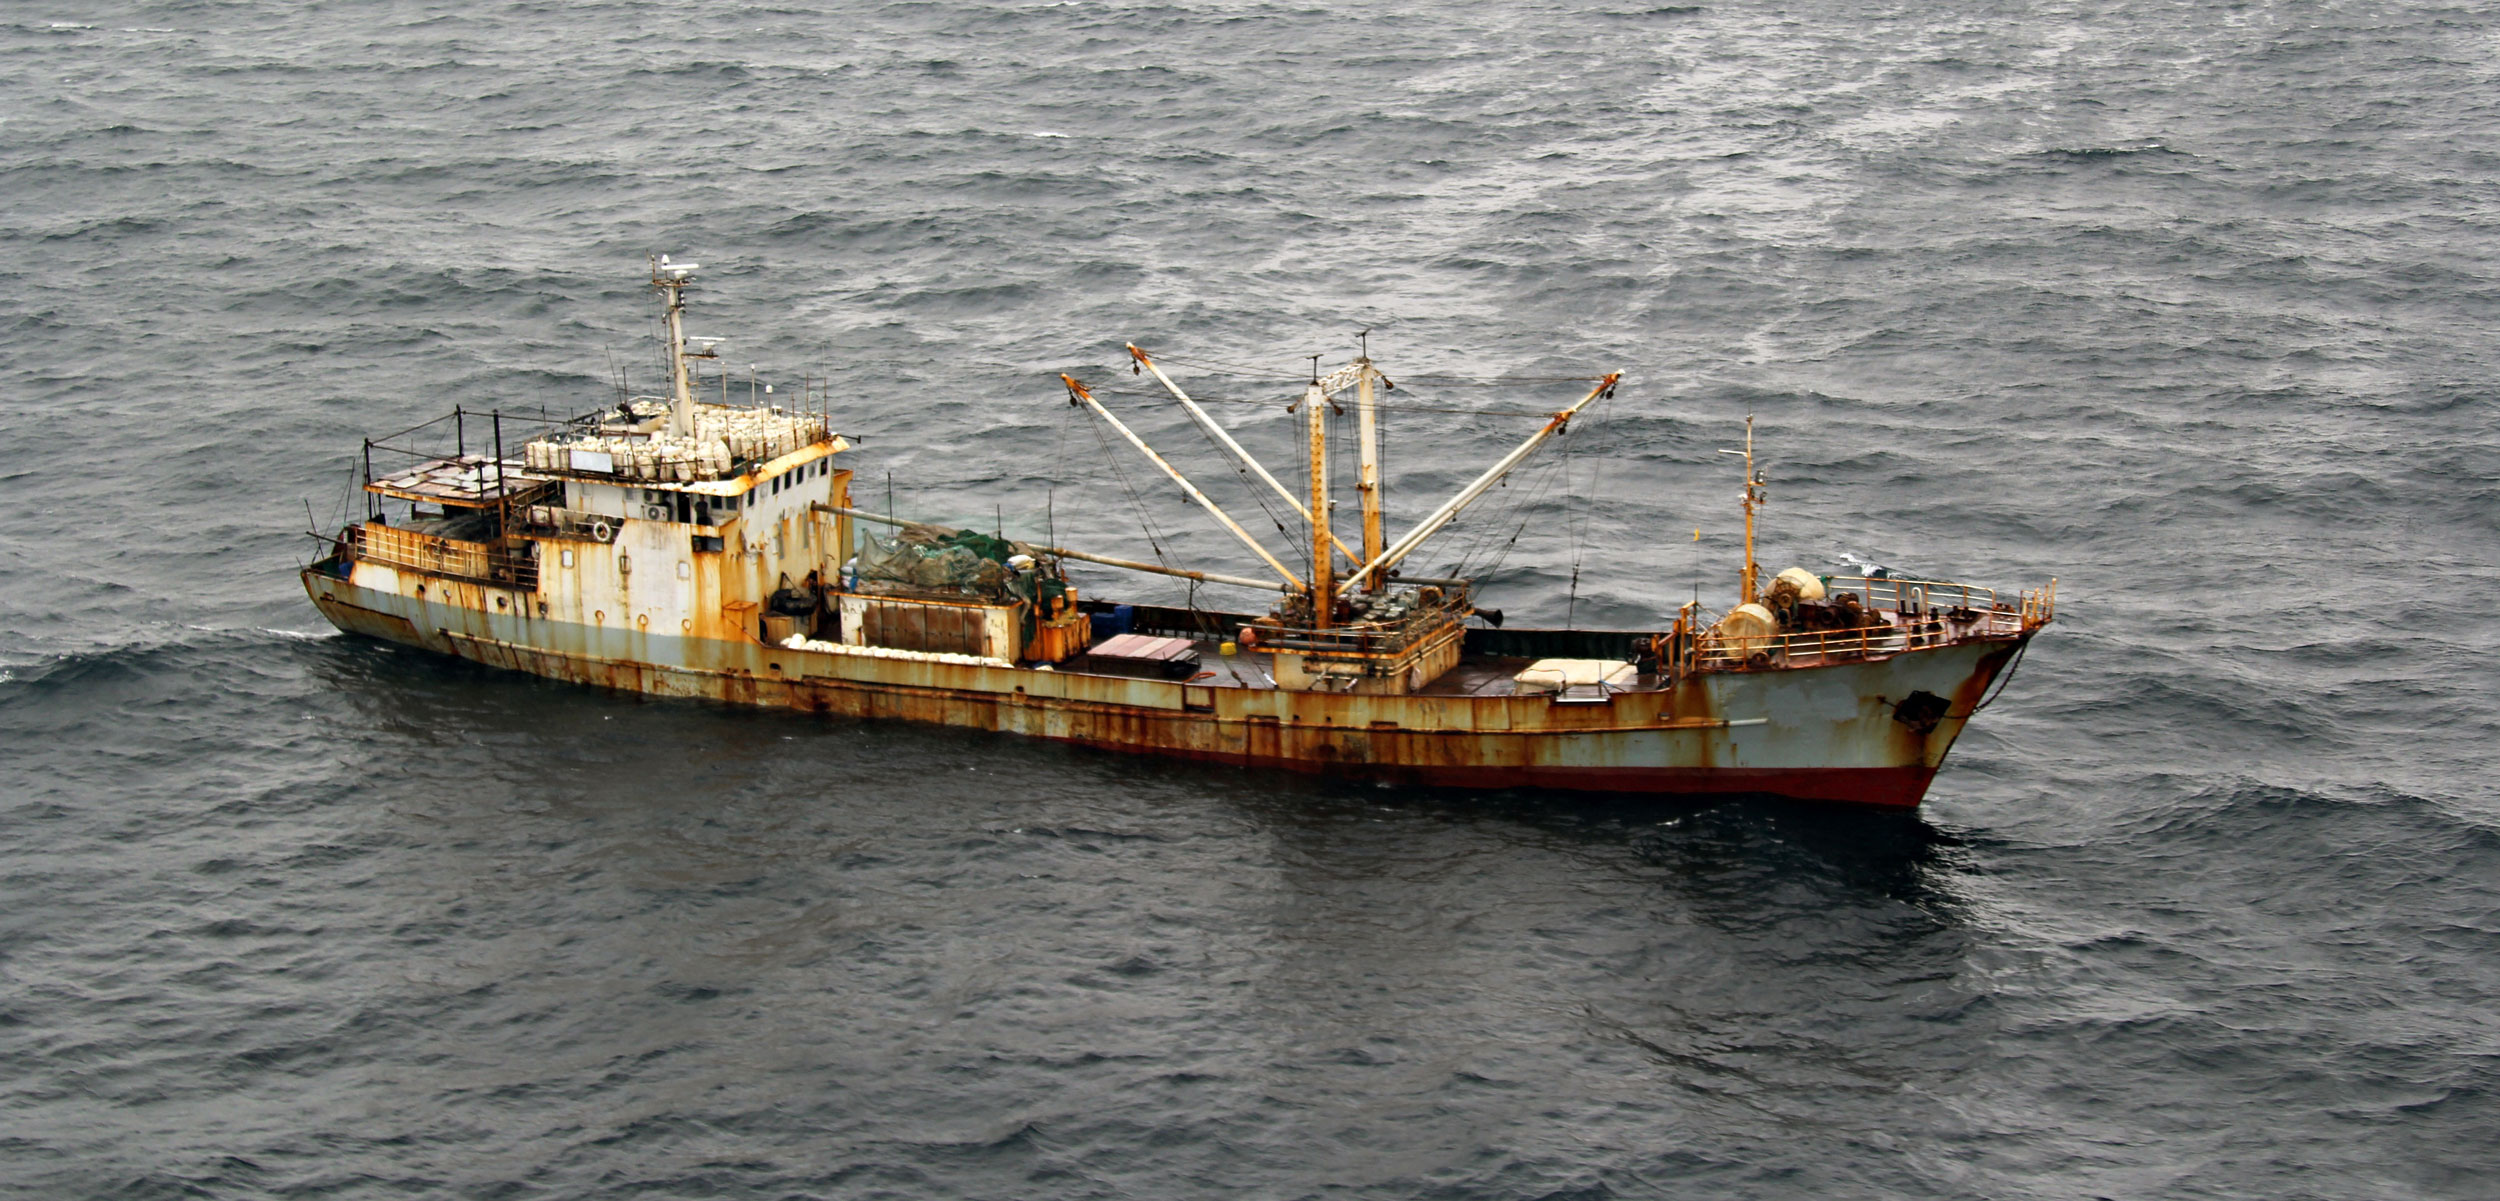 a Chinese fishing vessel